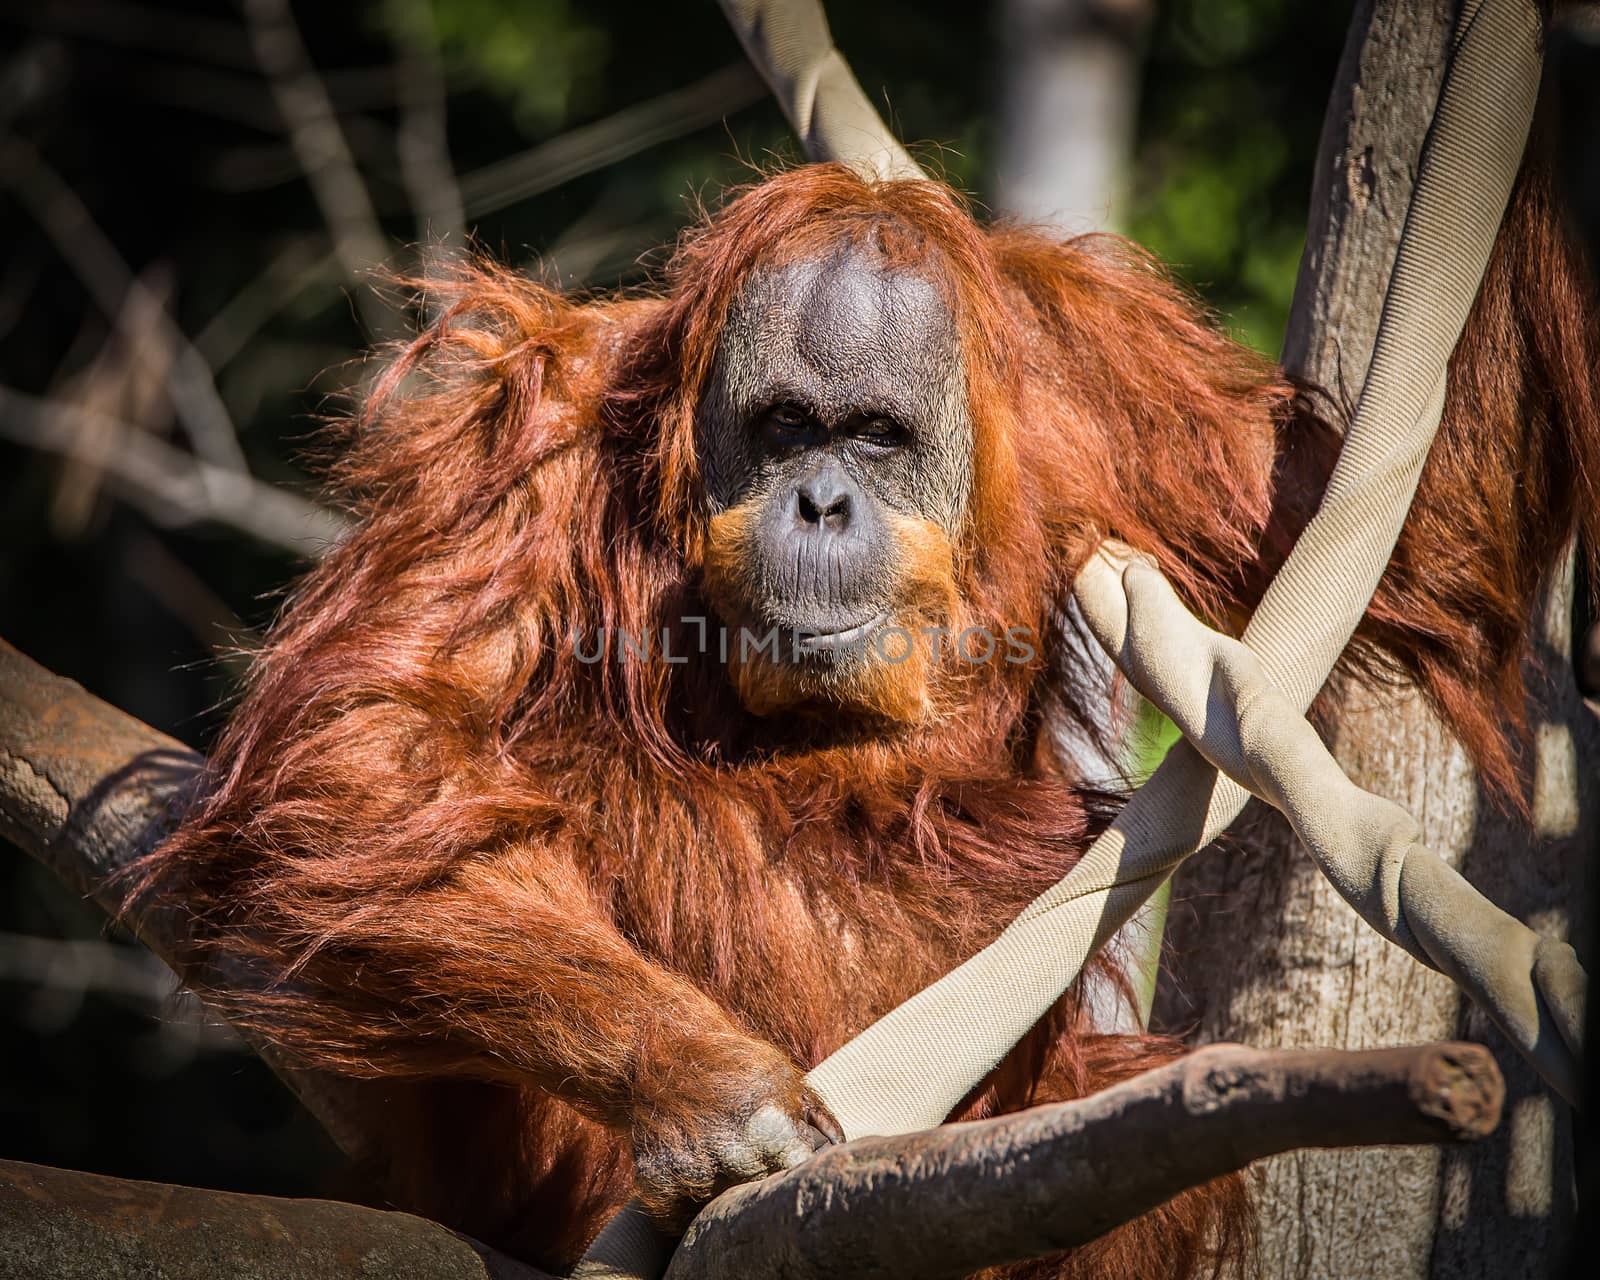 Orangutan sitting in a tree structure.